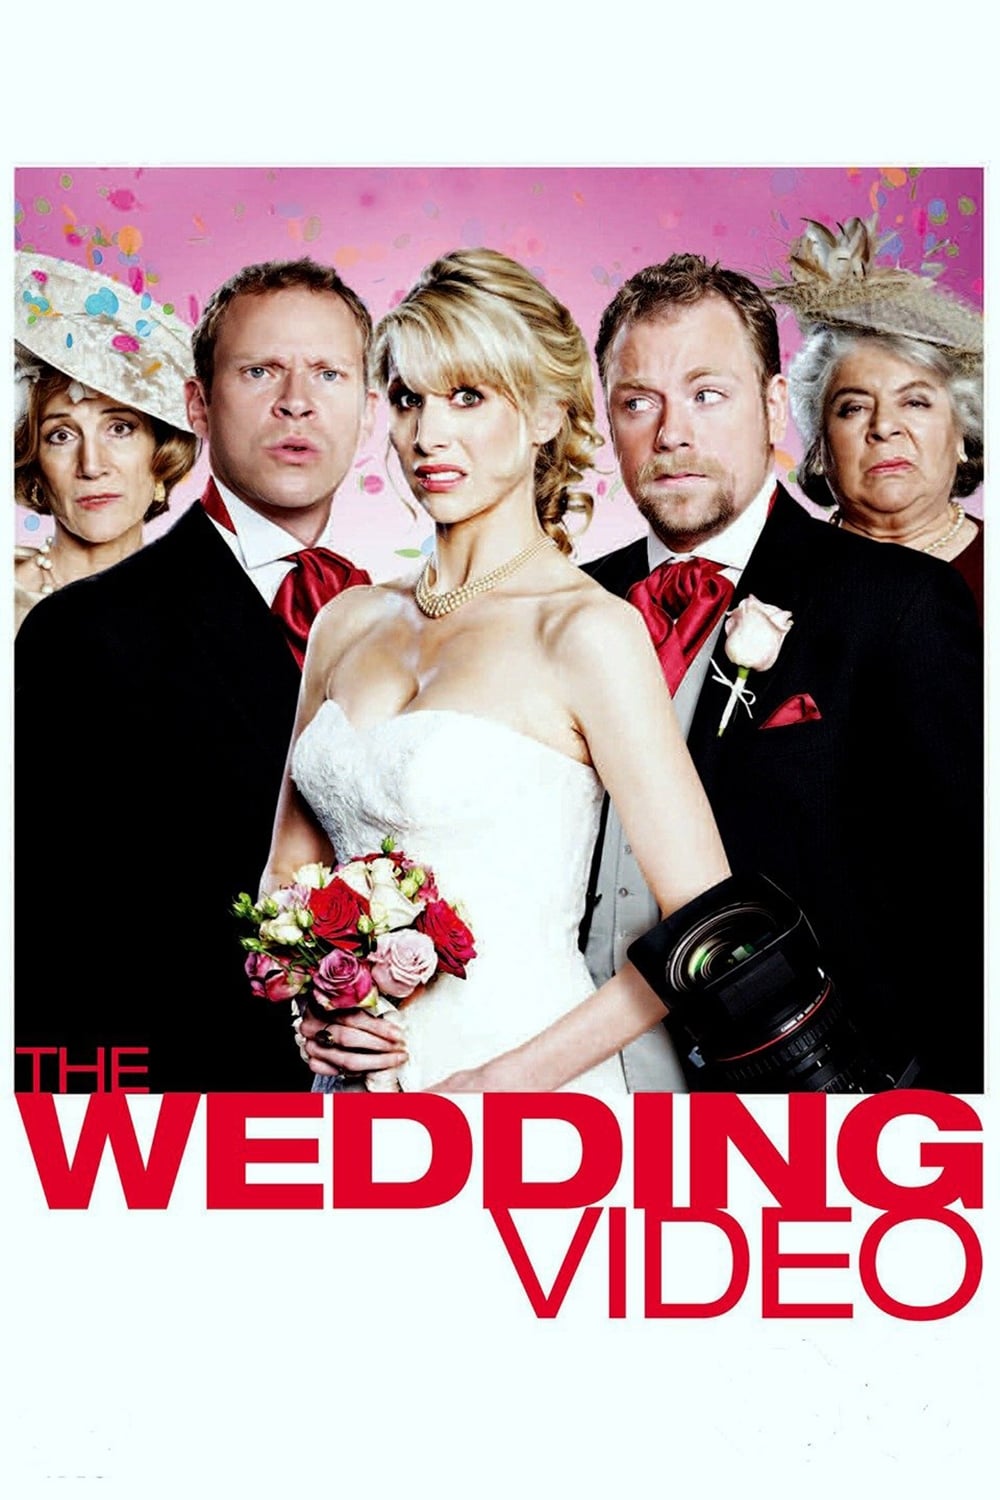 The Wedding Video [Sub-ITA] (2012)